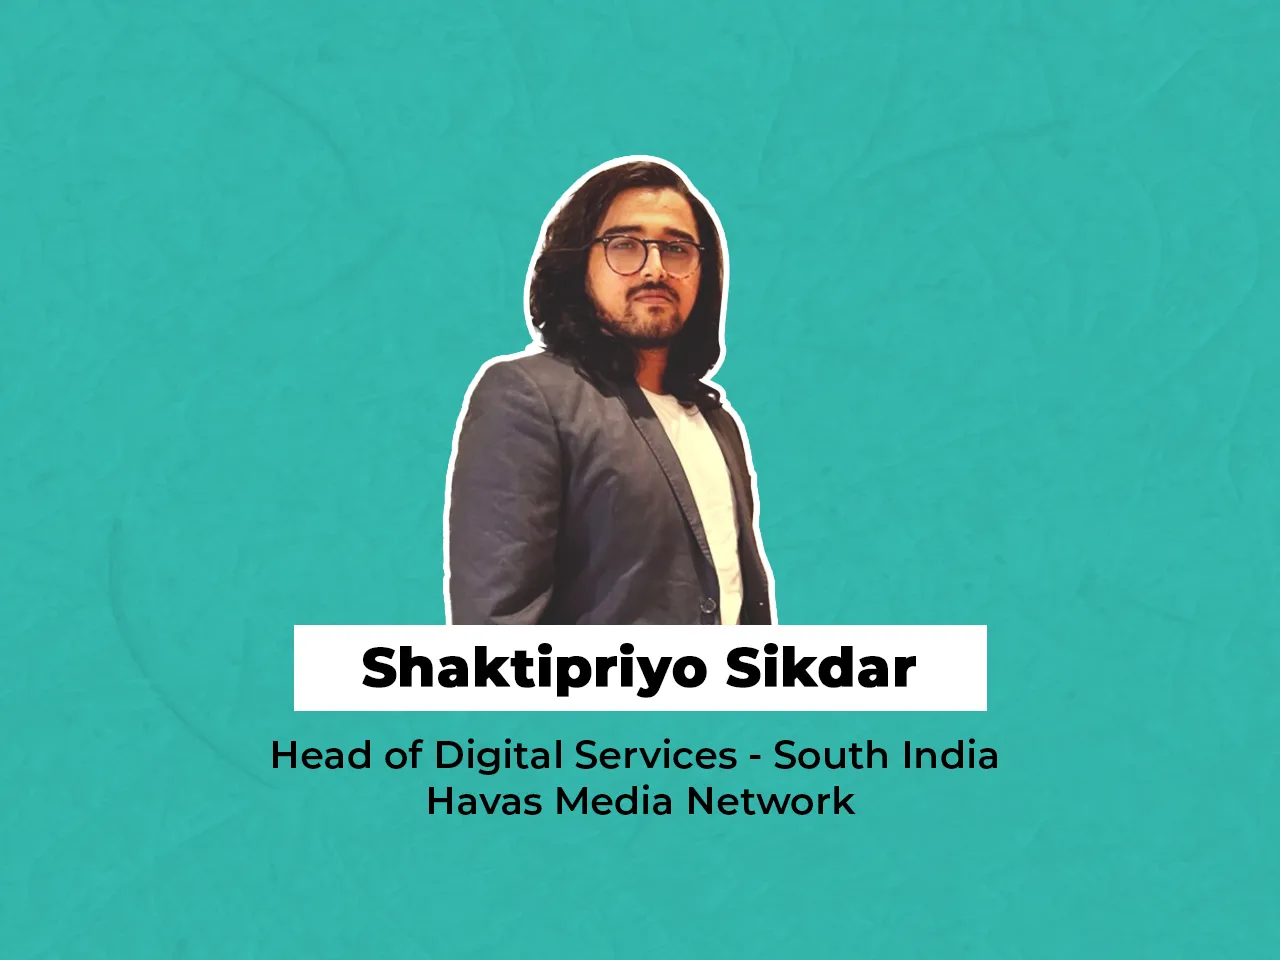 Shaktipriyo Sikdar joins Havas Media Network as the Head of Digital Services - South India